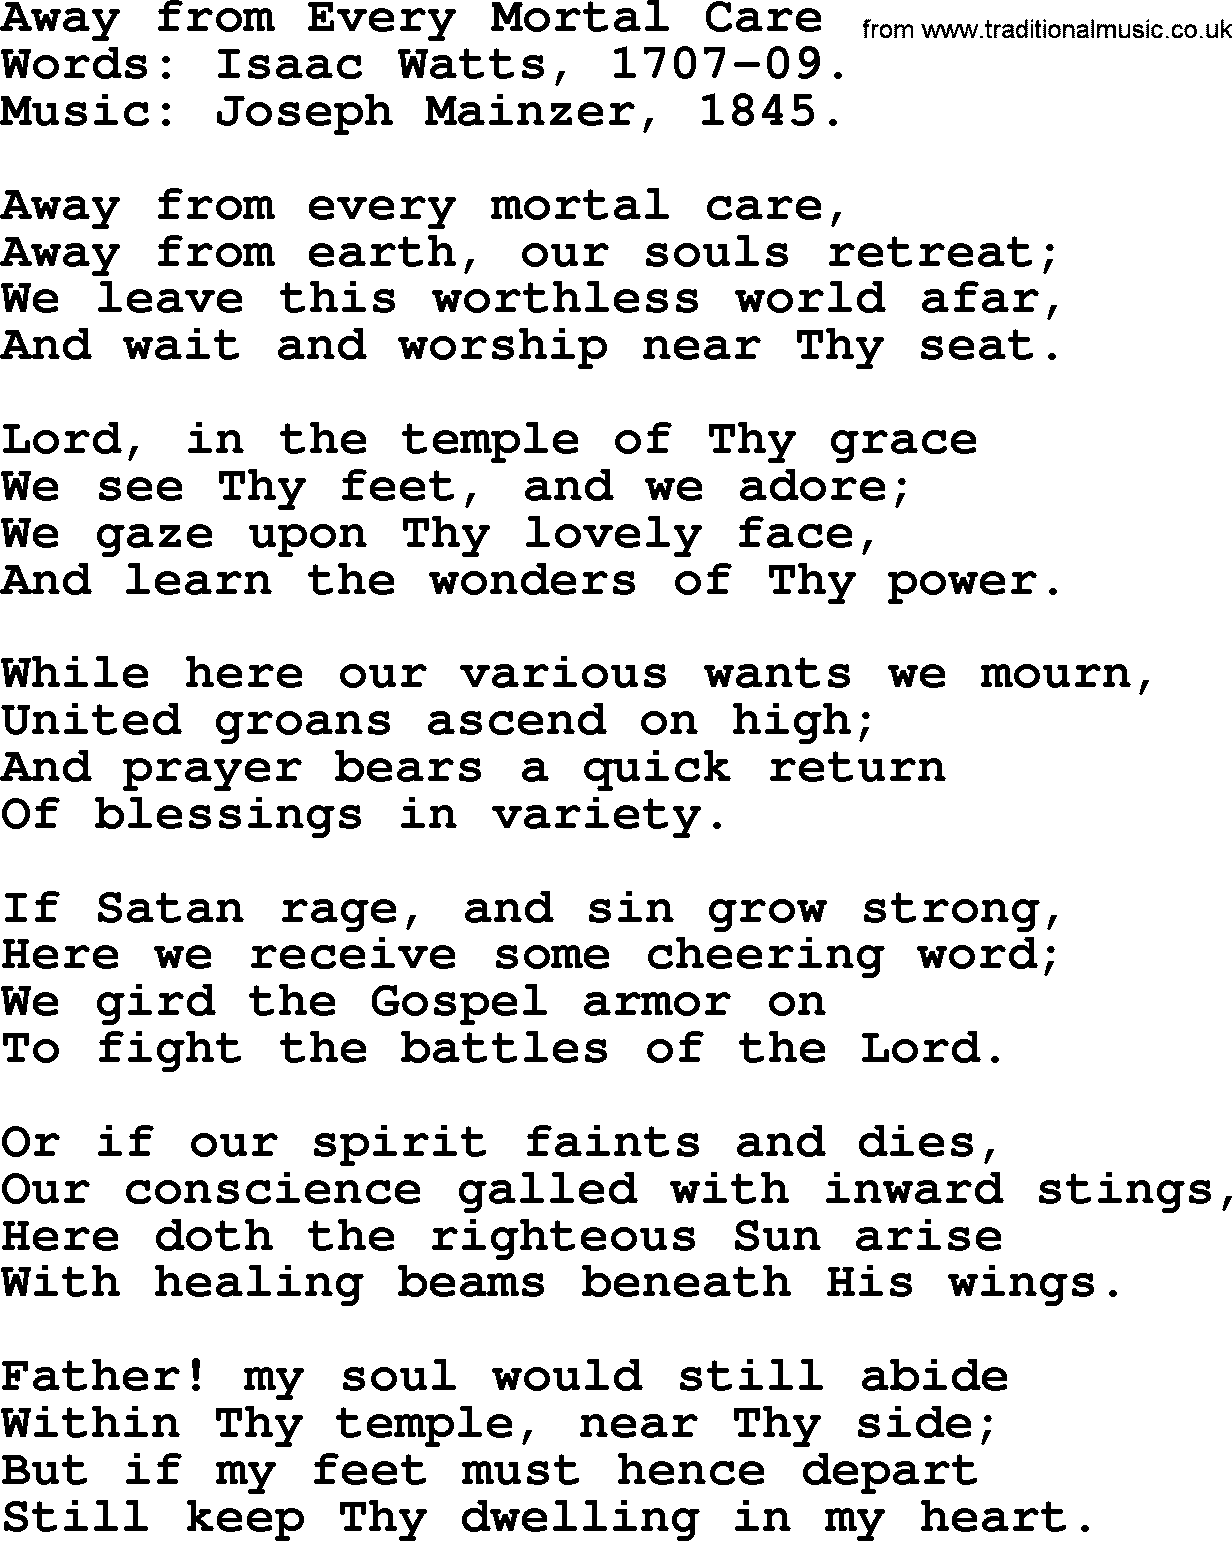 Isaac Watts Christian hymn: Away from Every Mortal Care- lyricss